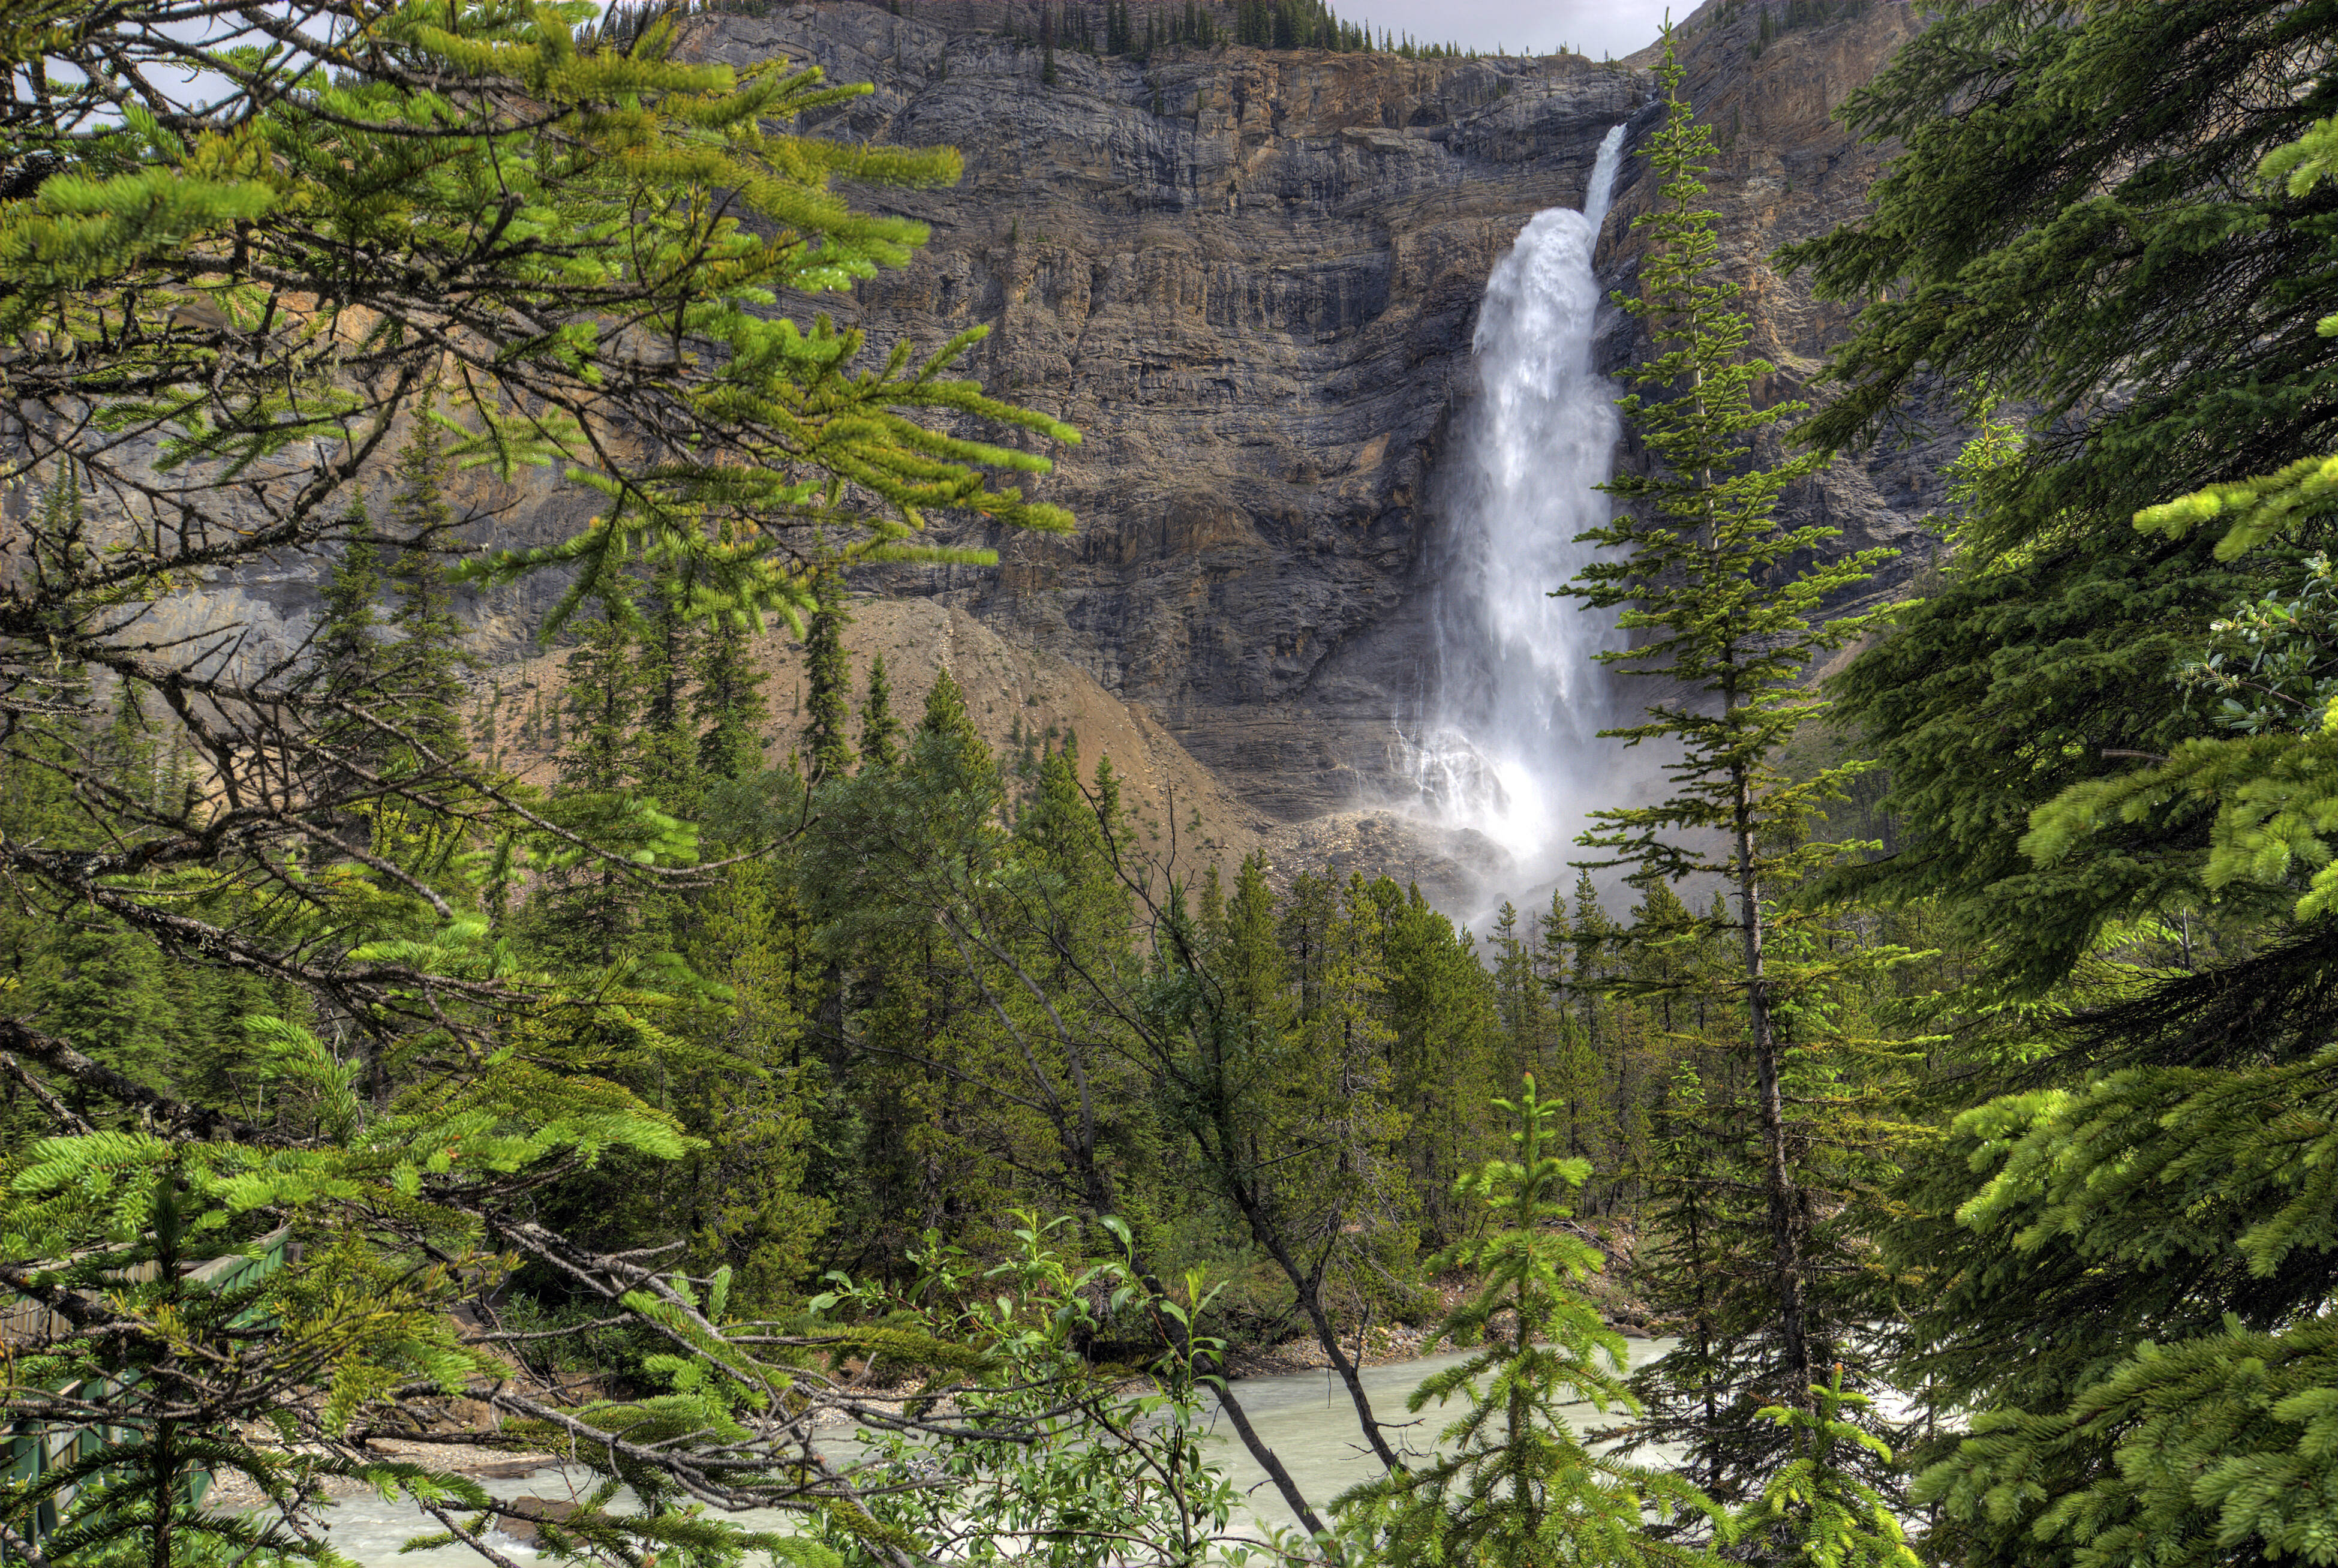 Takakkaw Falls in Yoho National Park is de tweede hoogste van Canada